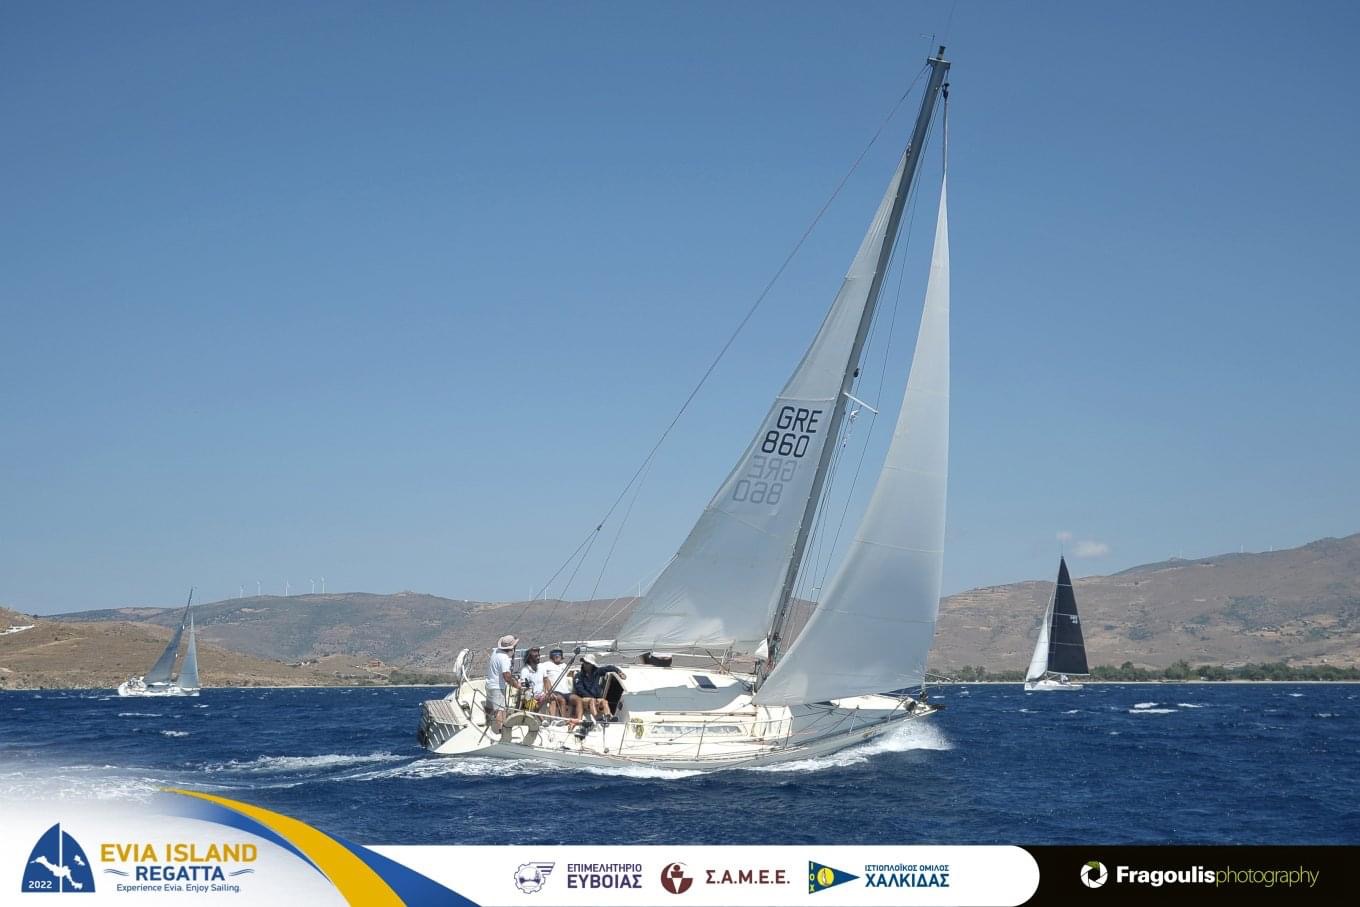 Evia Island Regatta 2022: Έφτασαν τα σκάφη στο λιμάνι του Καράβου (pics)